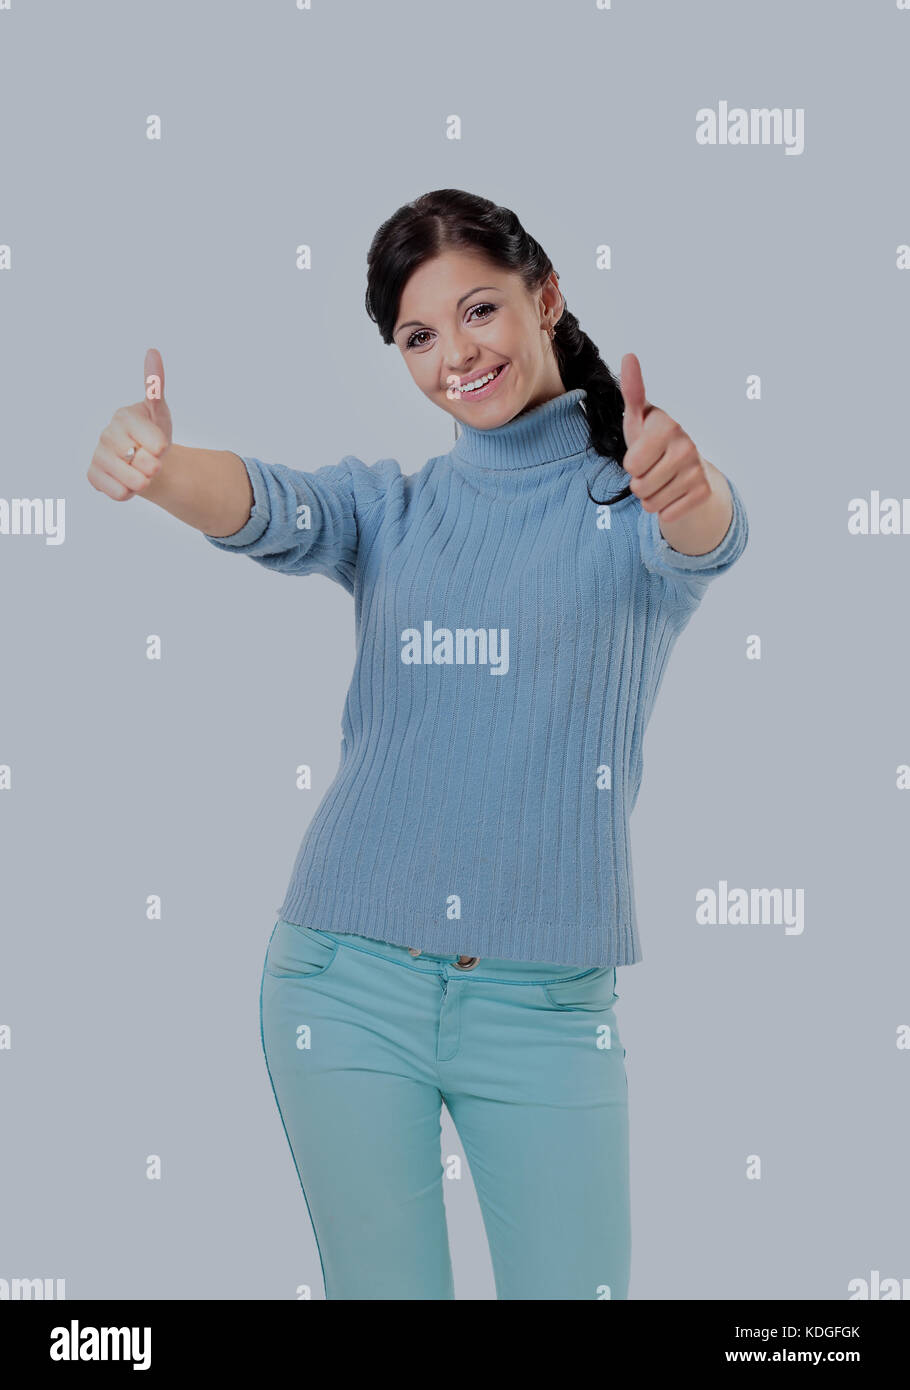 Thumb up. Smiling woman isolated white background Stock Photo